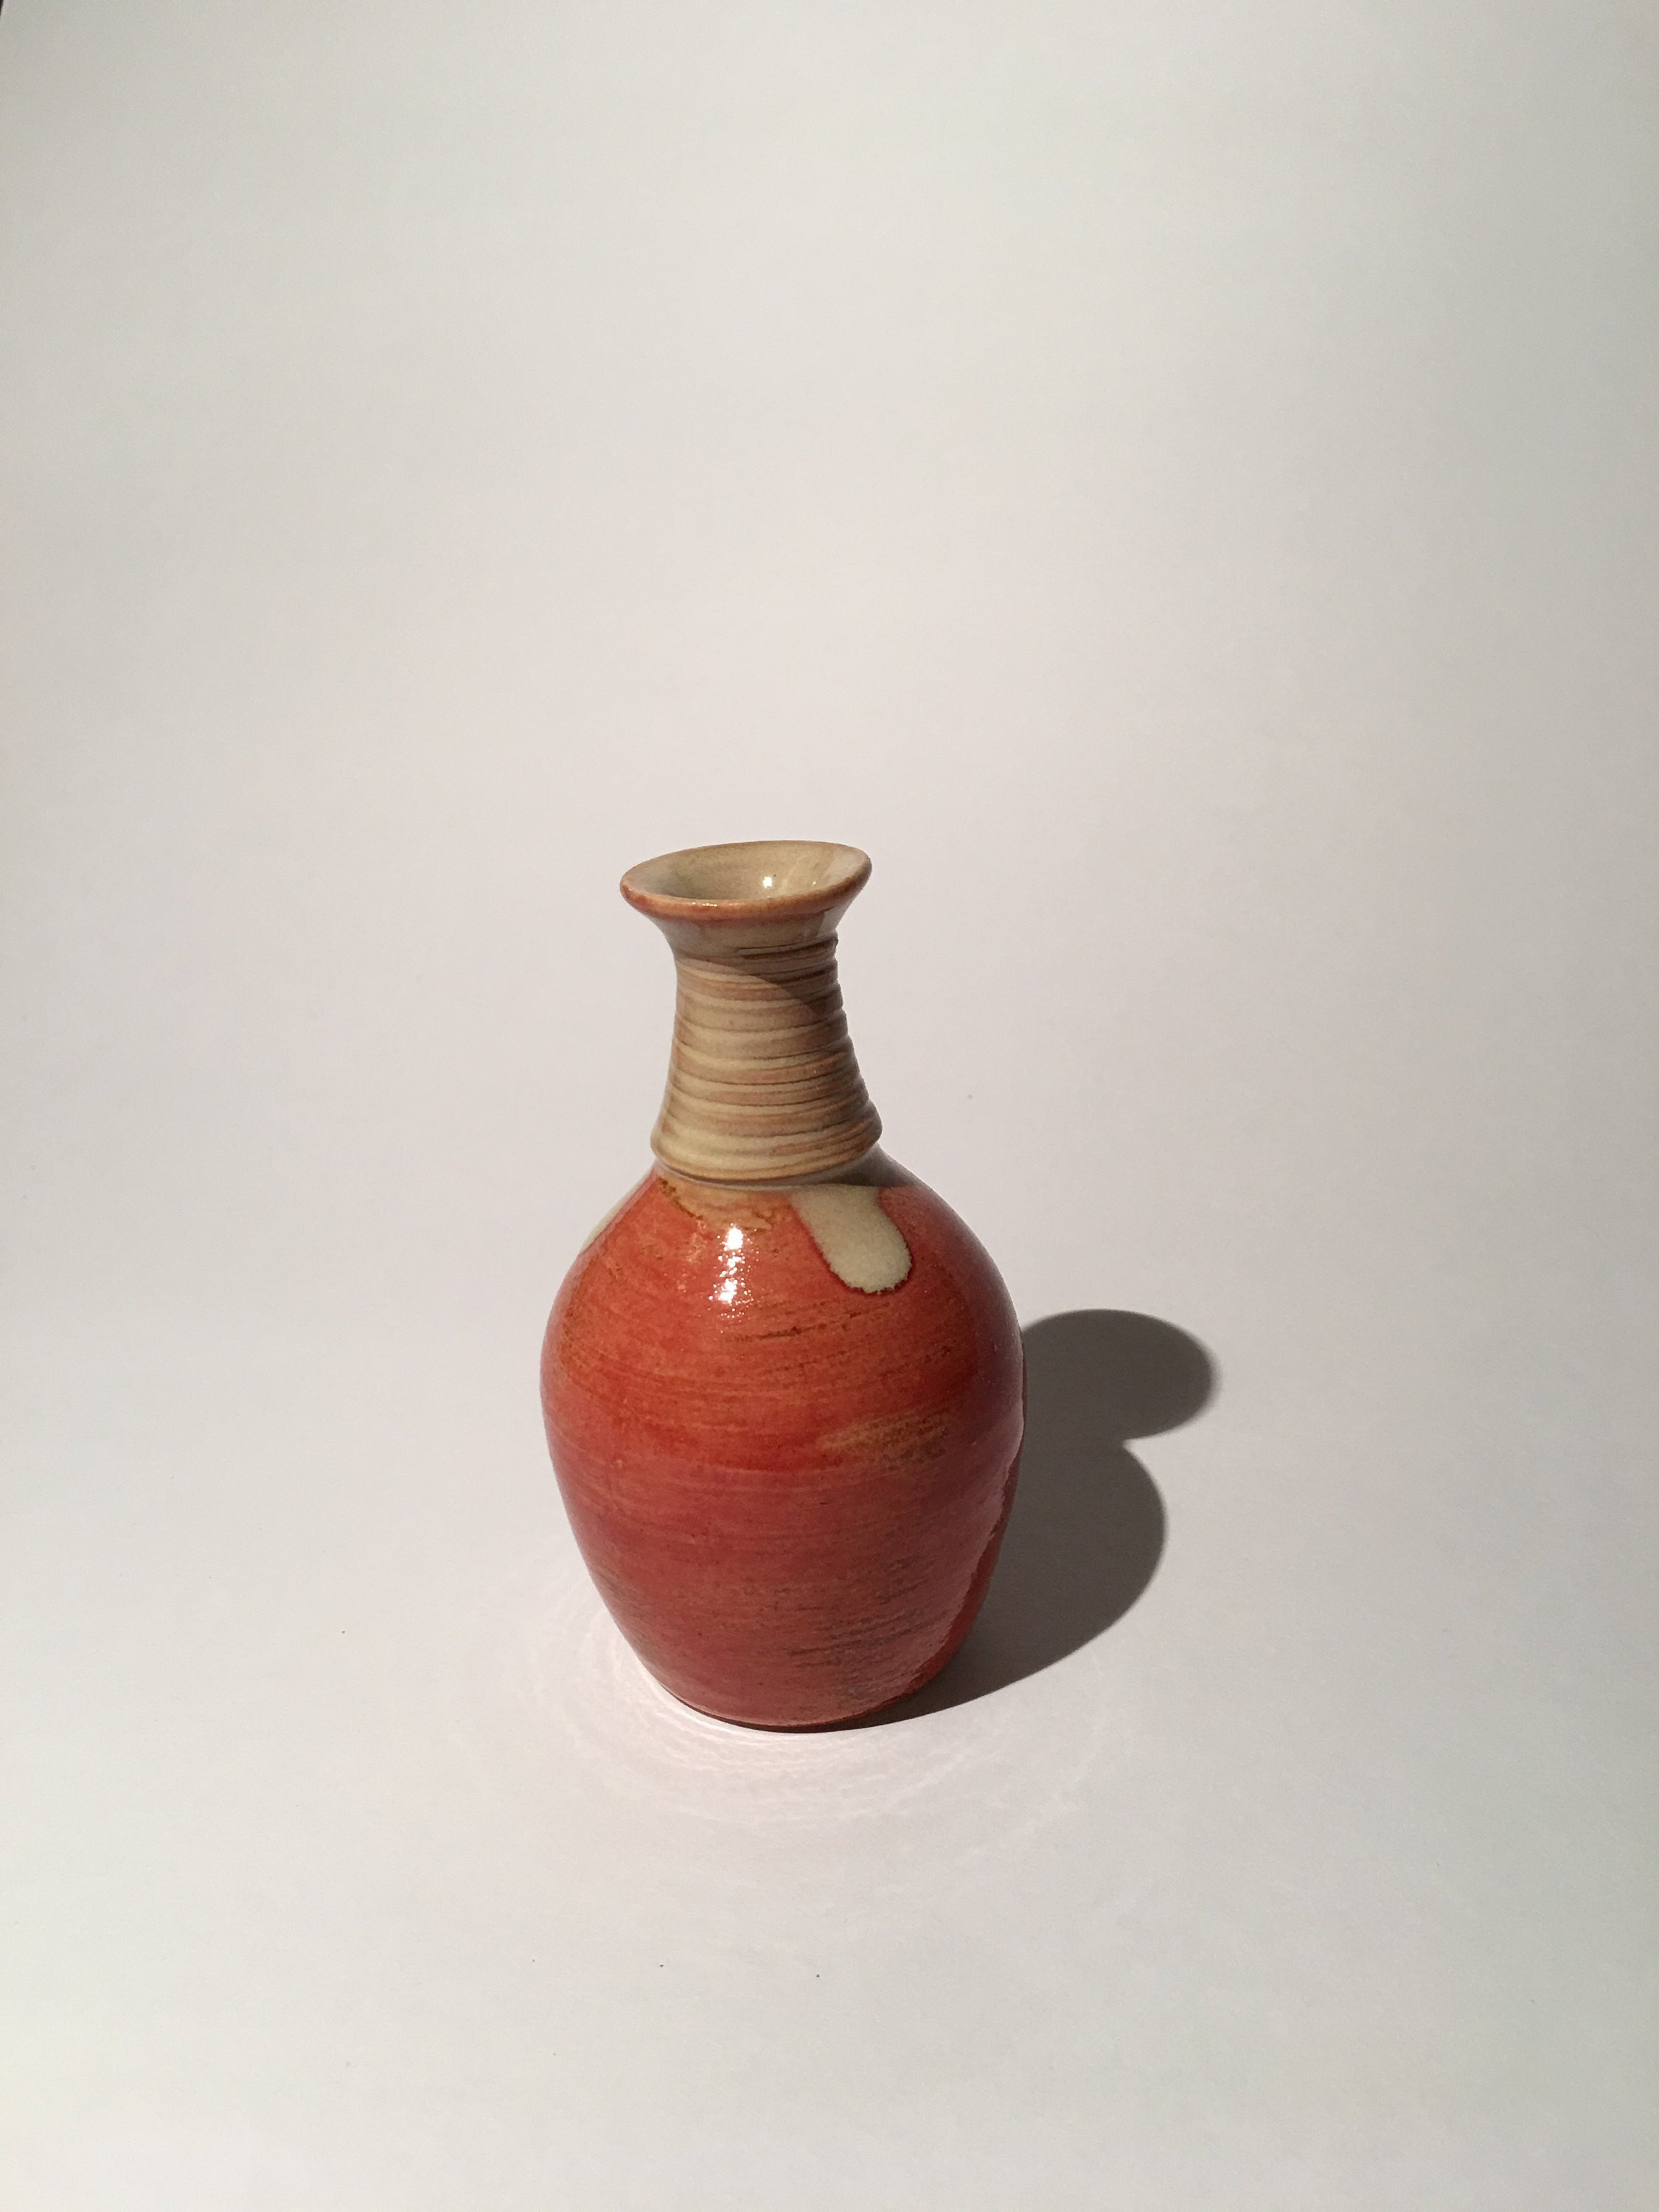 28 Lovely 4 Inch Bud Vase 2024 free download 4 inch bud vase of ceramic bud vase etsy in dc29fc294c28ezoom